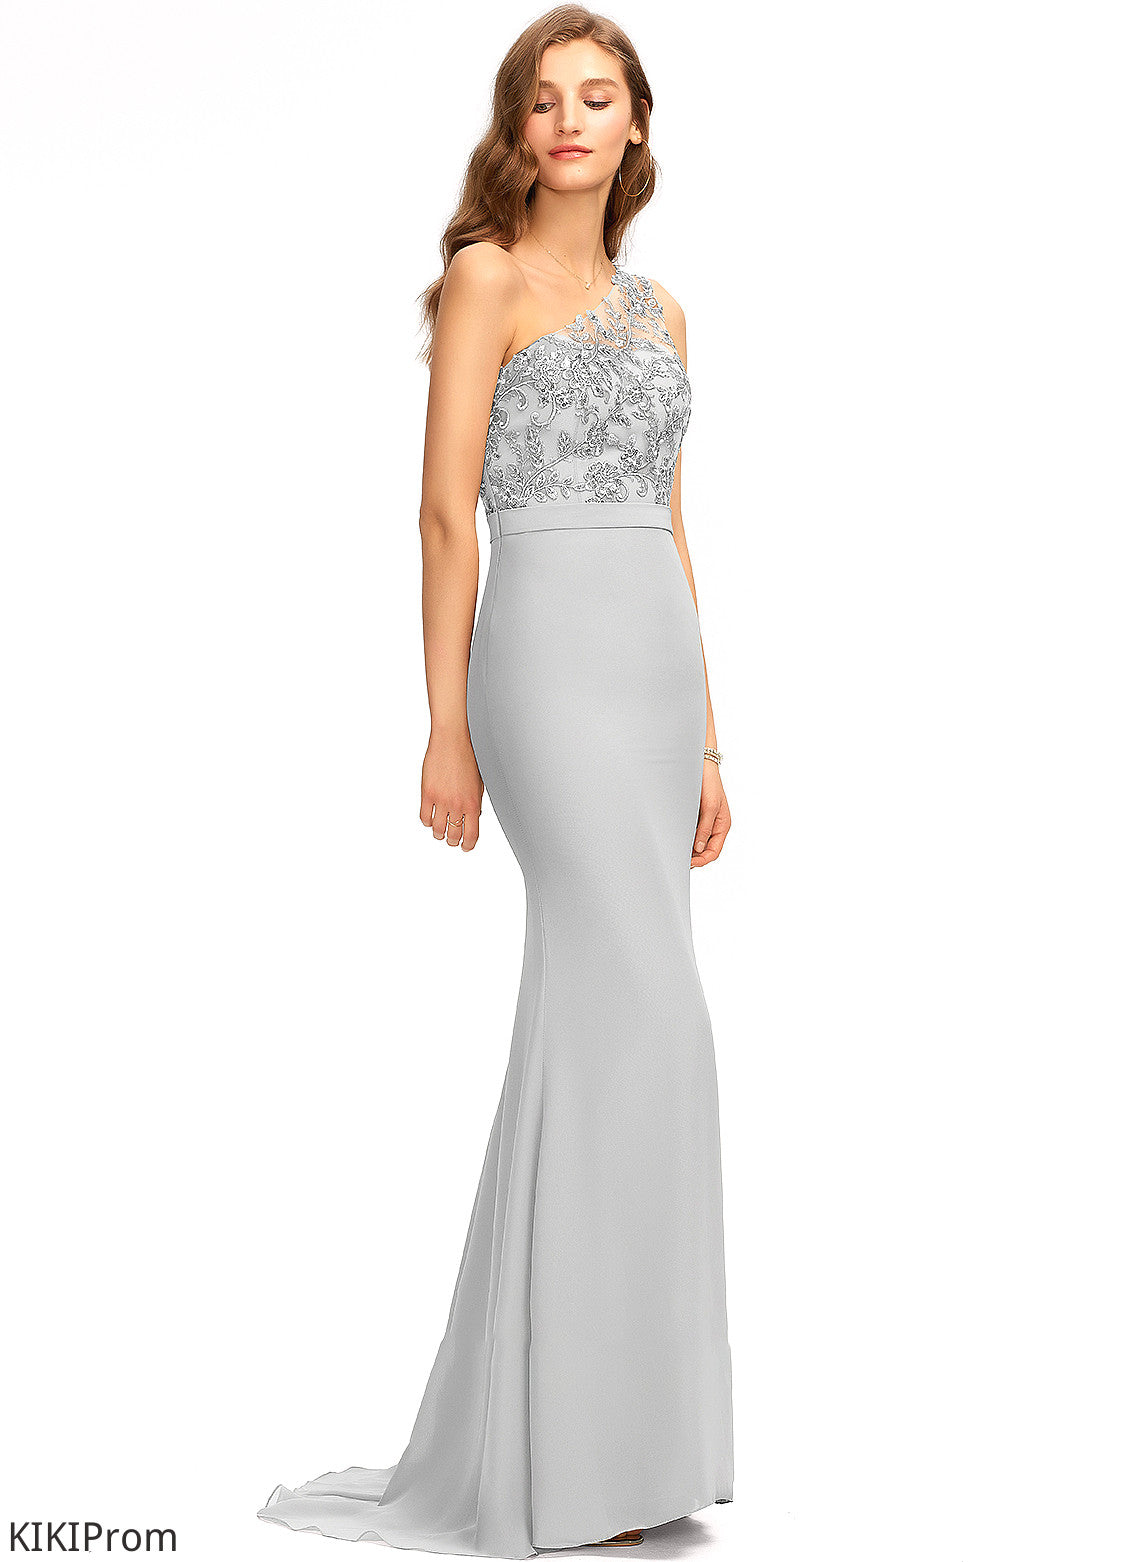 Fabric Neckline Straps Lace SweepTrain Length Trumpet/Mermaid One-Shoulder Silhouette Jaycee Floor Length Natural Waist Bridesmaid Dresses